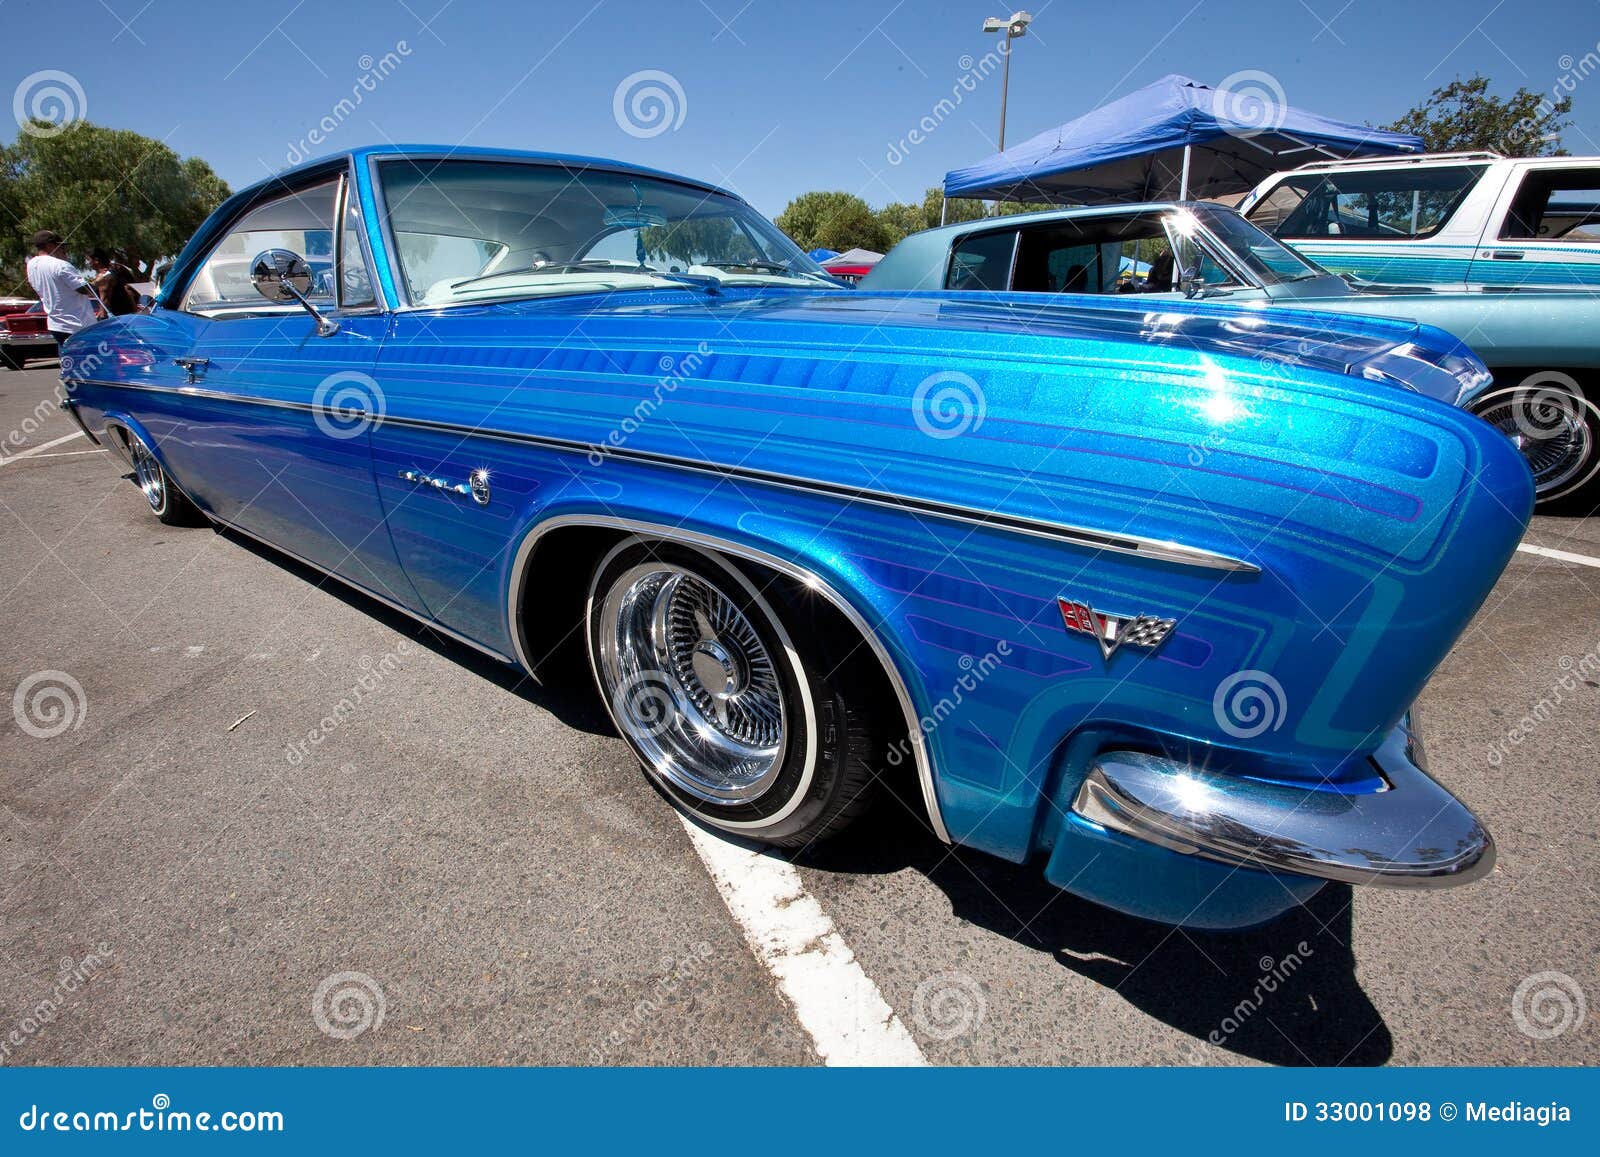 1966 Chevy Impala Custom Paint Editorial Stock Photo - Image of chrome,  vintage: 33001098